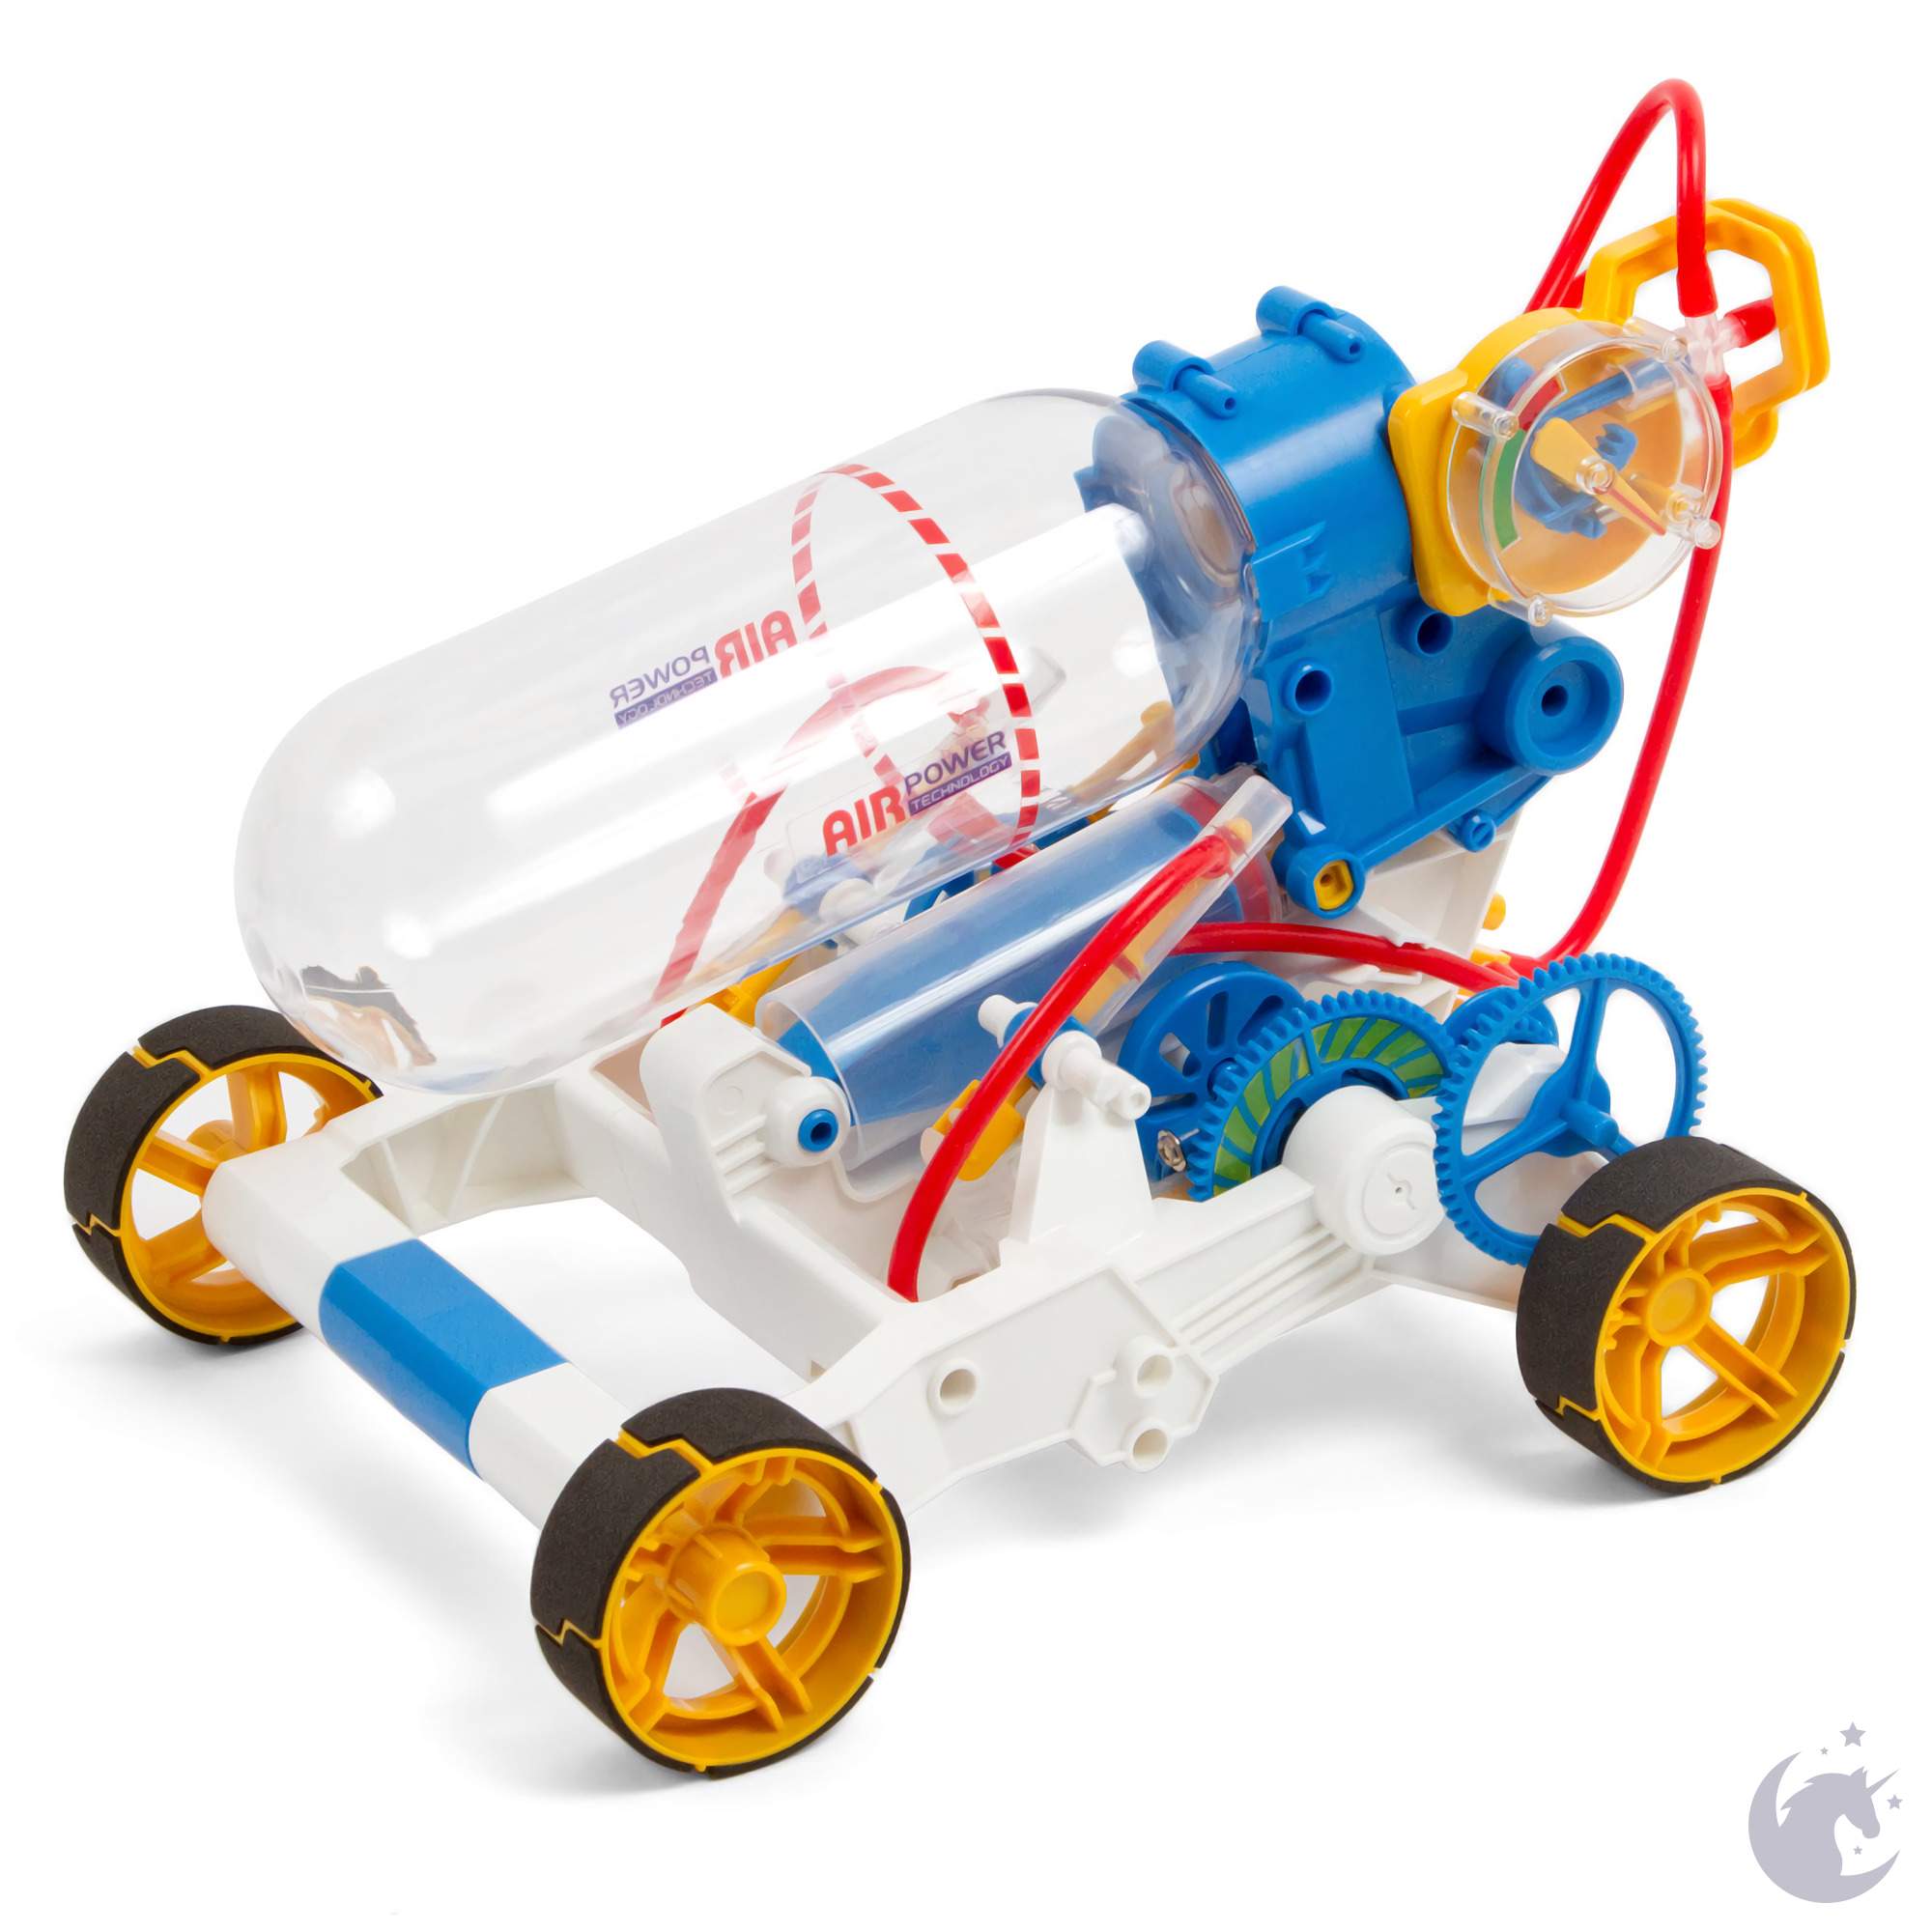 unicorntoys cic kits air power engine car educational robot kit engineering stem toys for kids CIC21-631